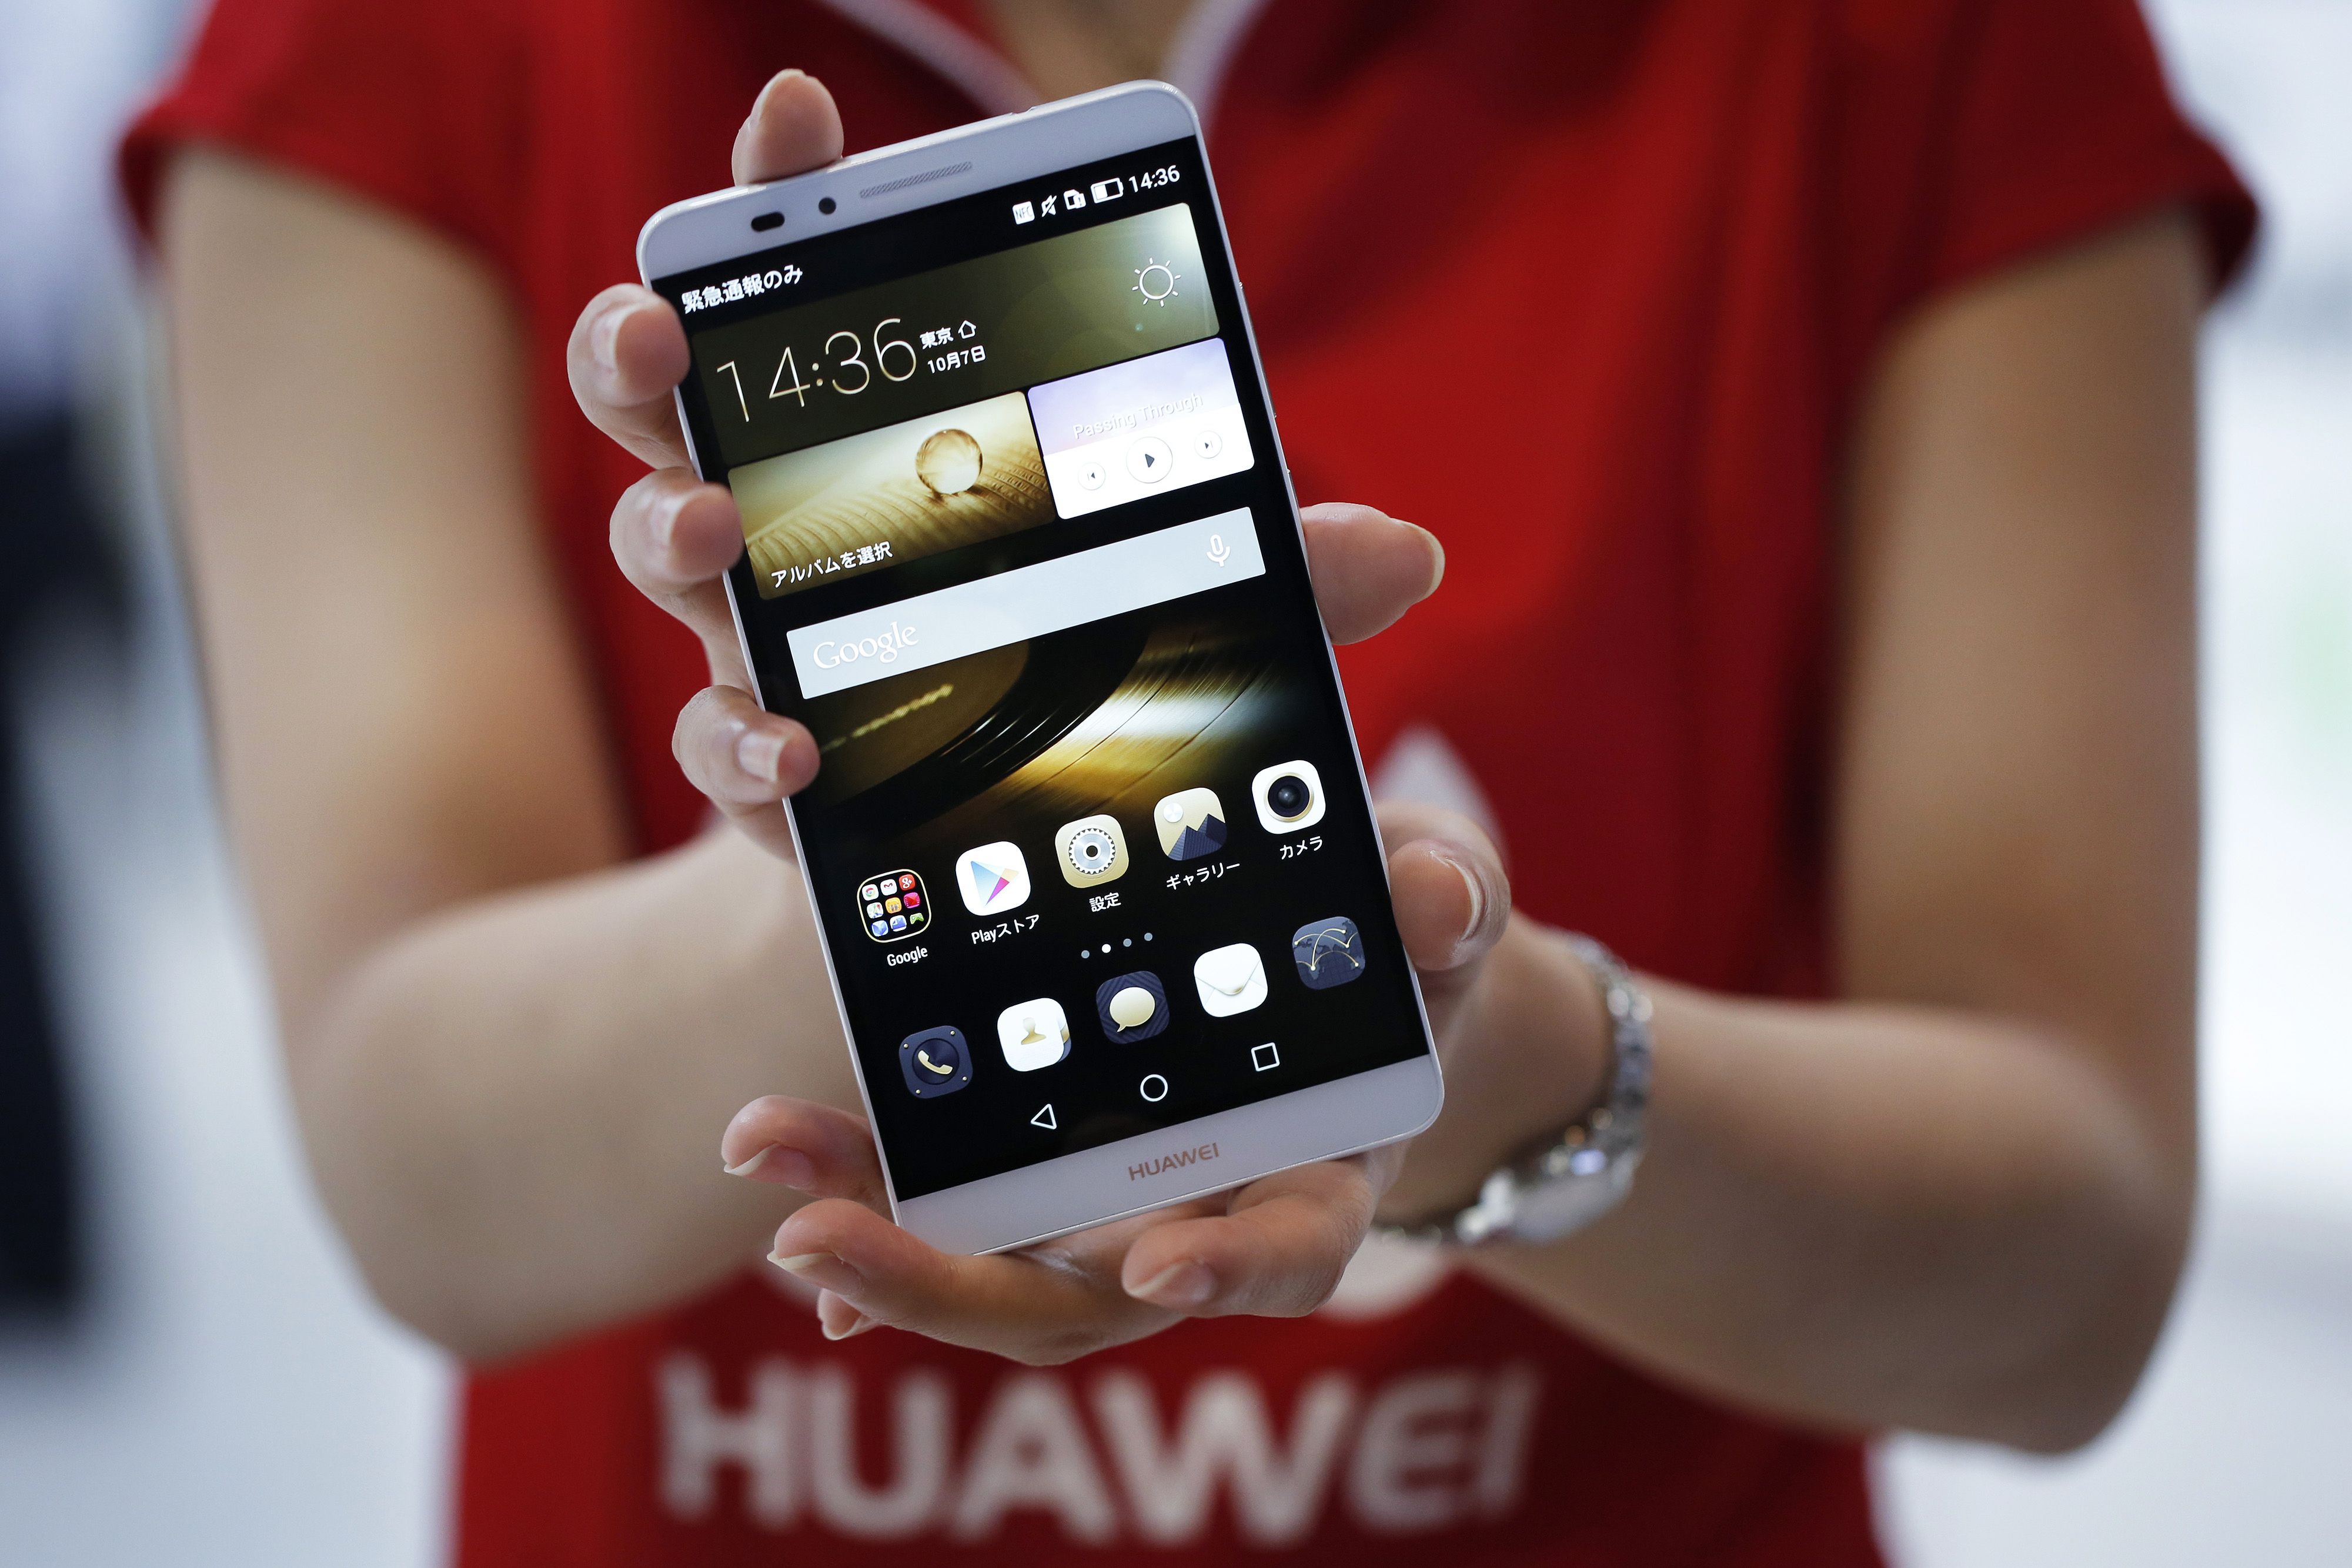 A Huawei phone. (Bloomberg&mdash;Bloomberg via Getty Images)